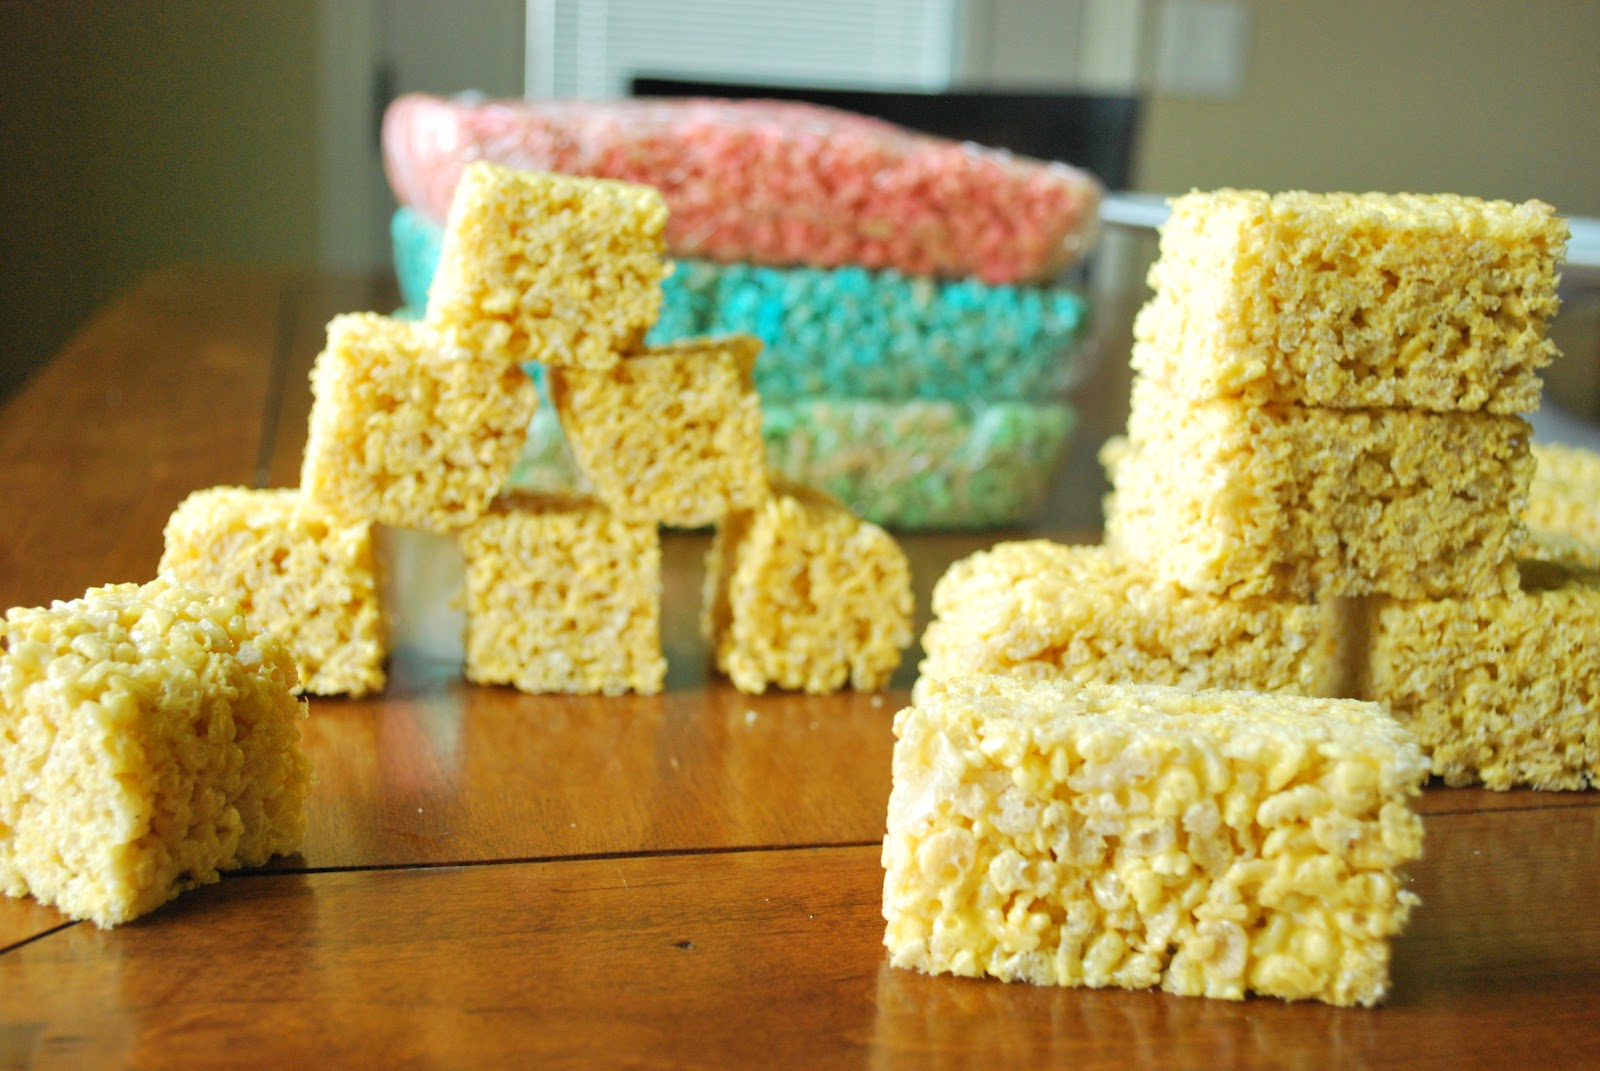 LEGO Rice Krispie Treats